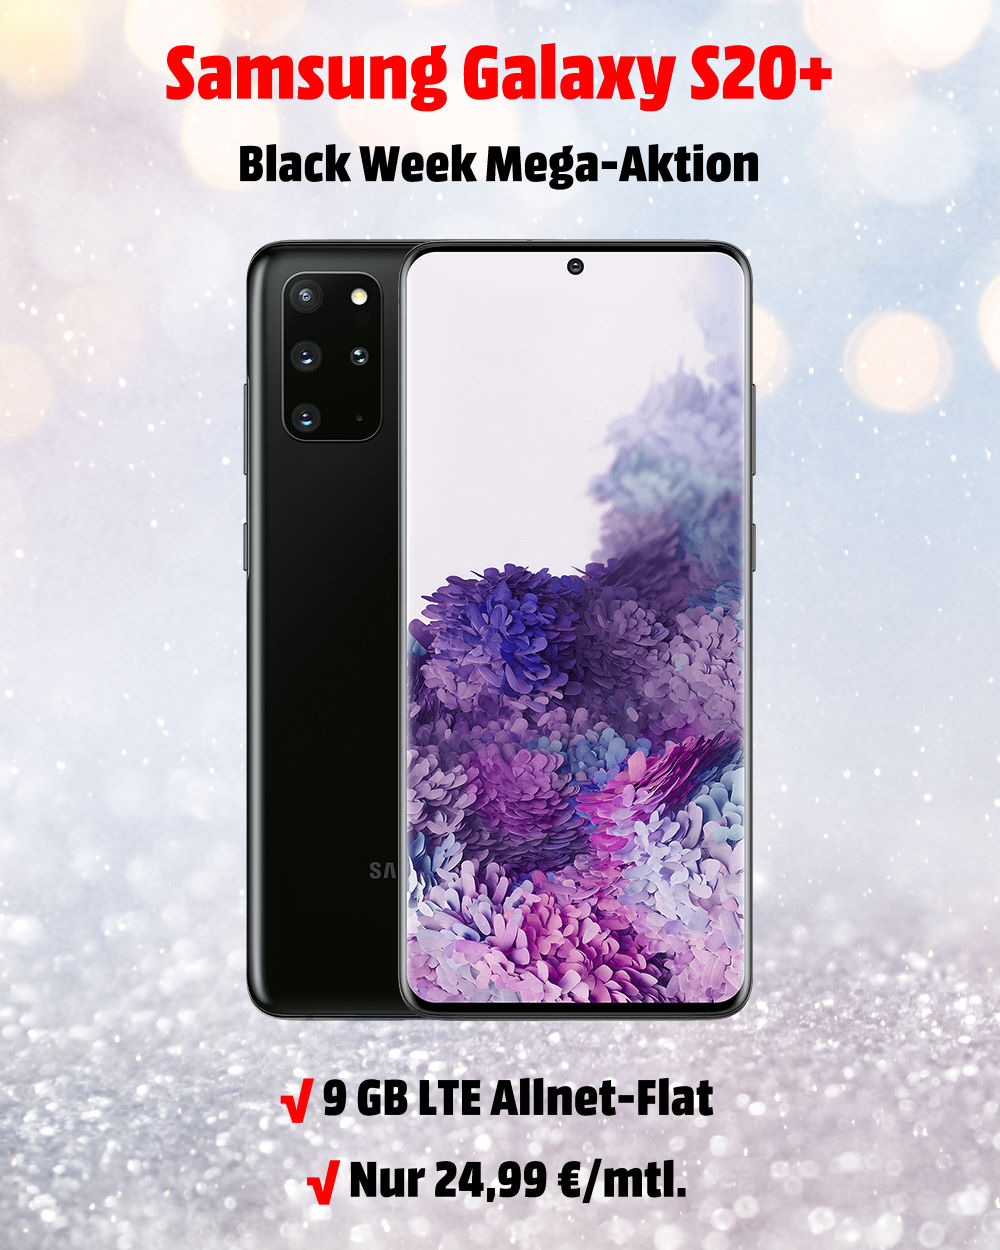 Galaxy S20 Plus Handyvertrag mit 9 GB LTE Allnet-Flat - Black Week Aktion